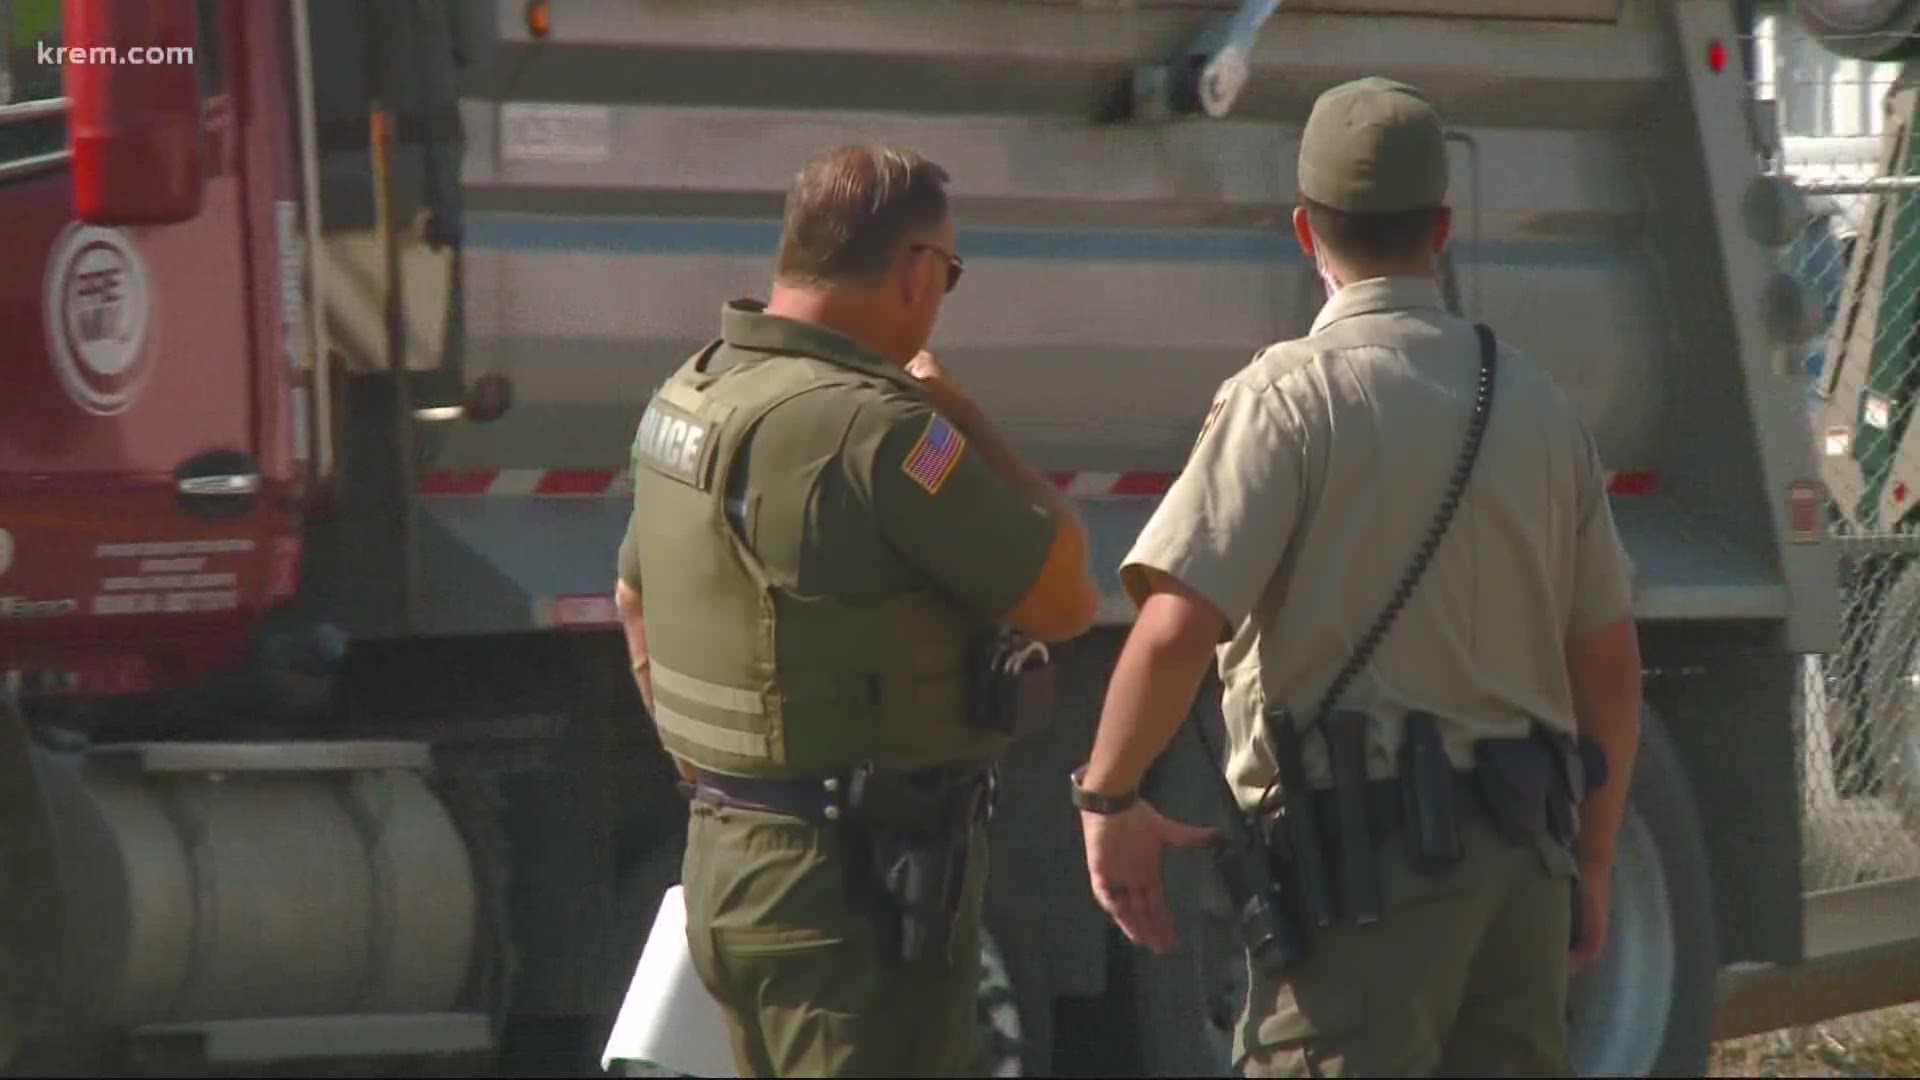 Carjacking suspect killed, officer injured in shooting at Spokane Valley motel